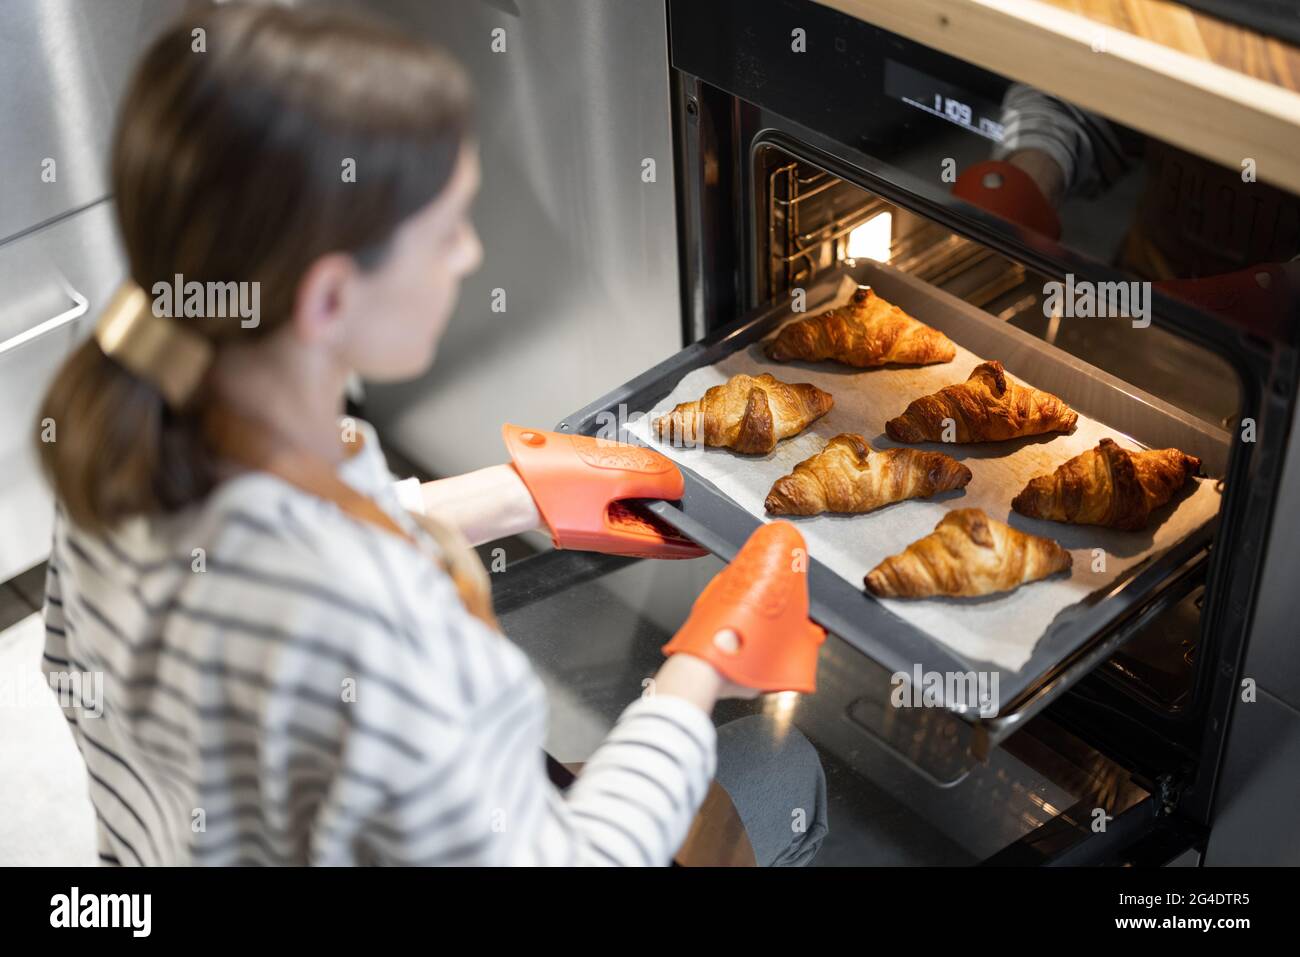 Baking croissants at home Stock Photo